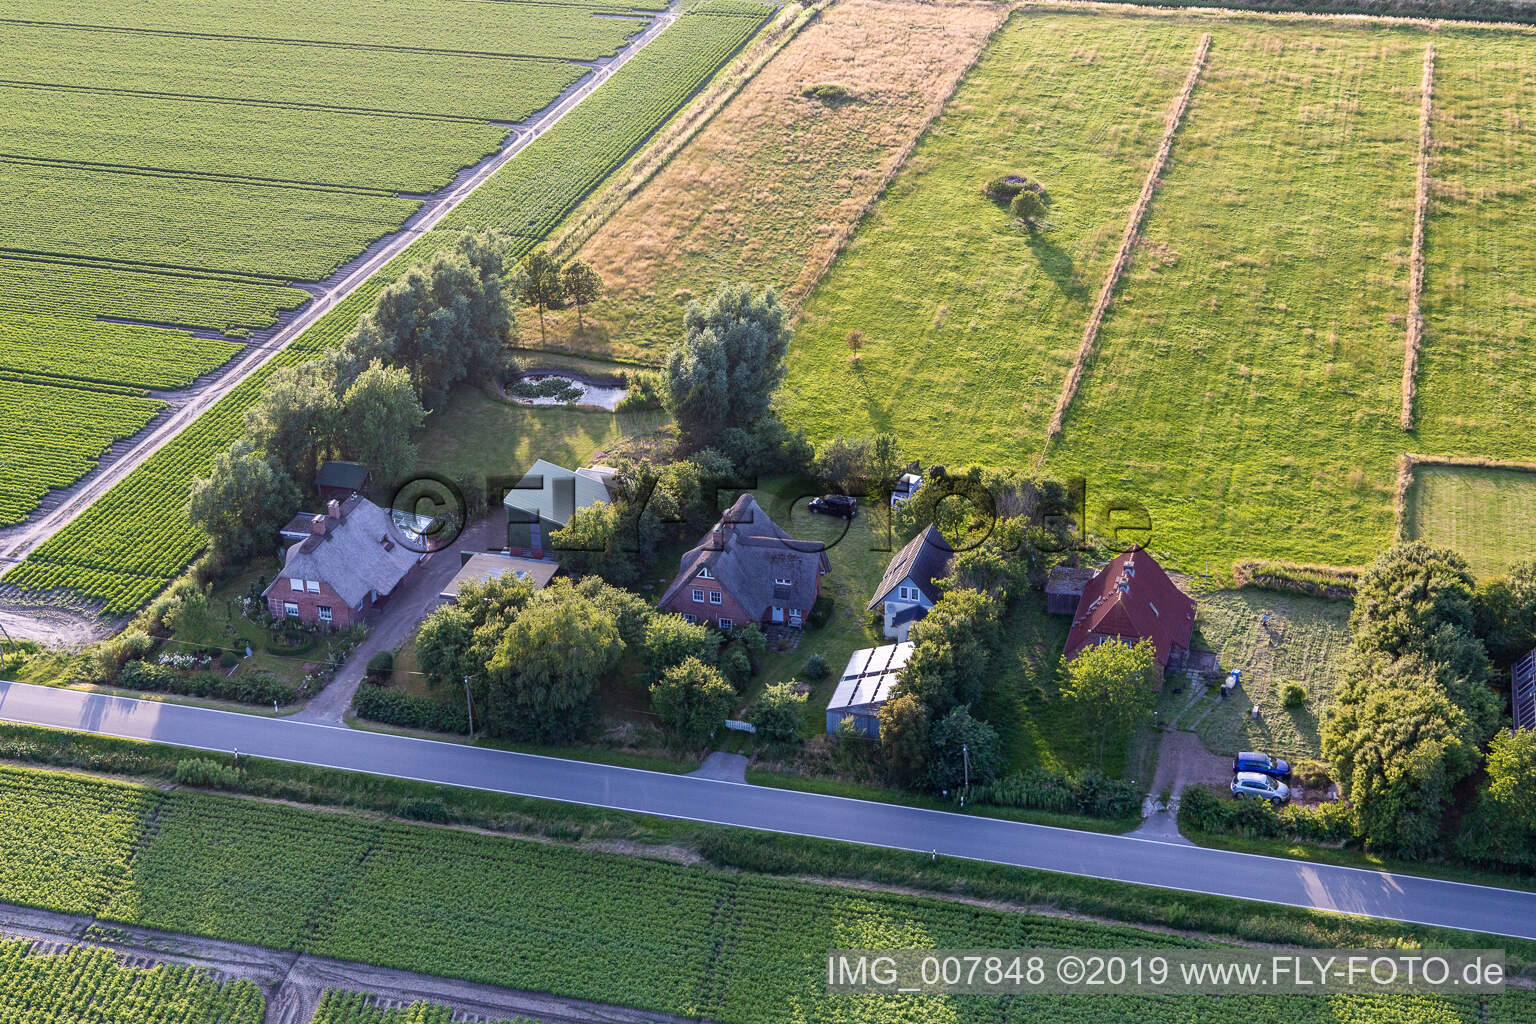 Schülpersieler Straße in Wesselburenerkoog in the state Schleswig Holstein, Germany from the drone perspective